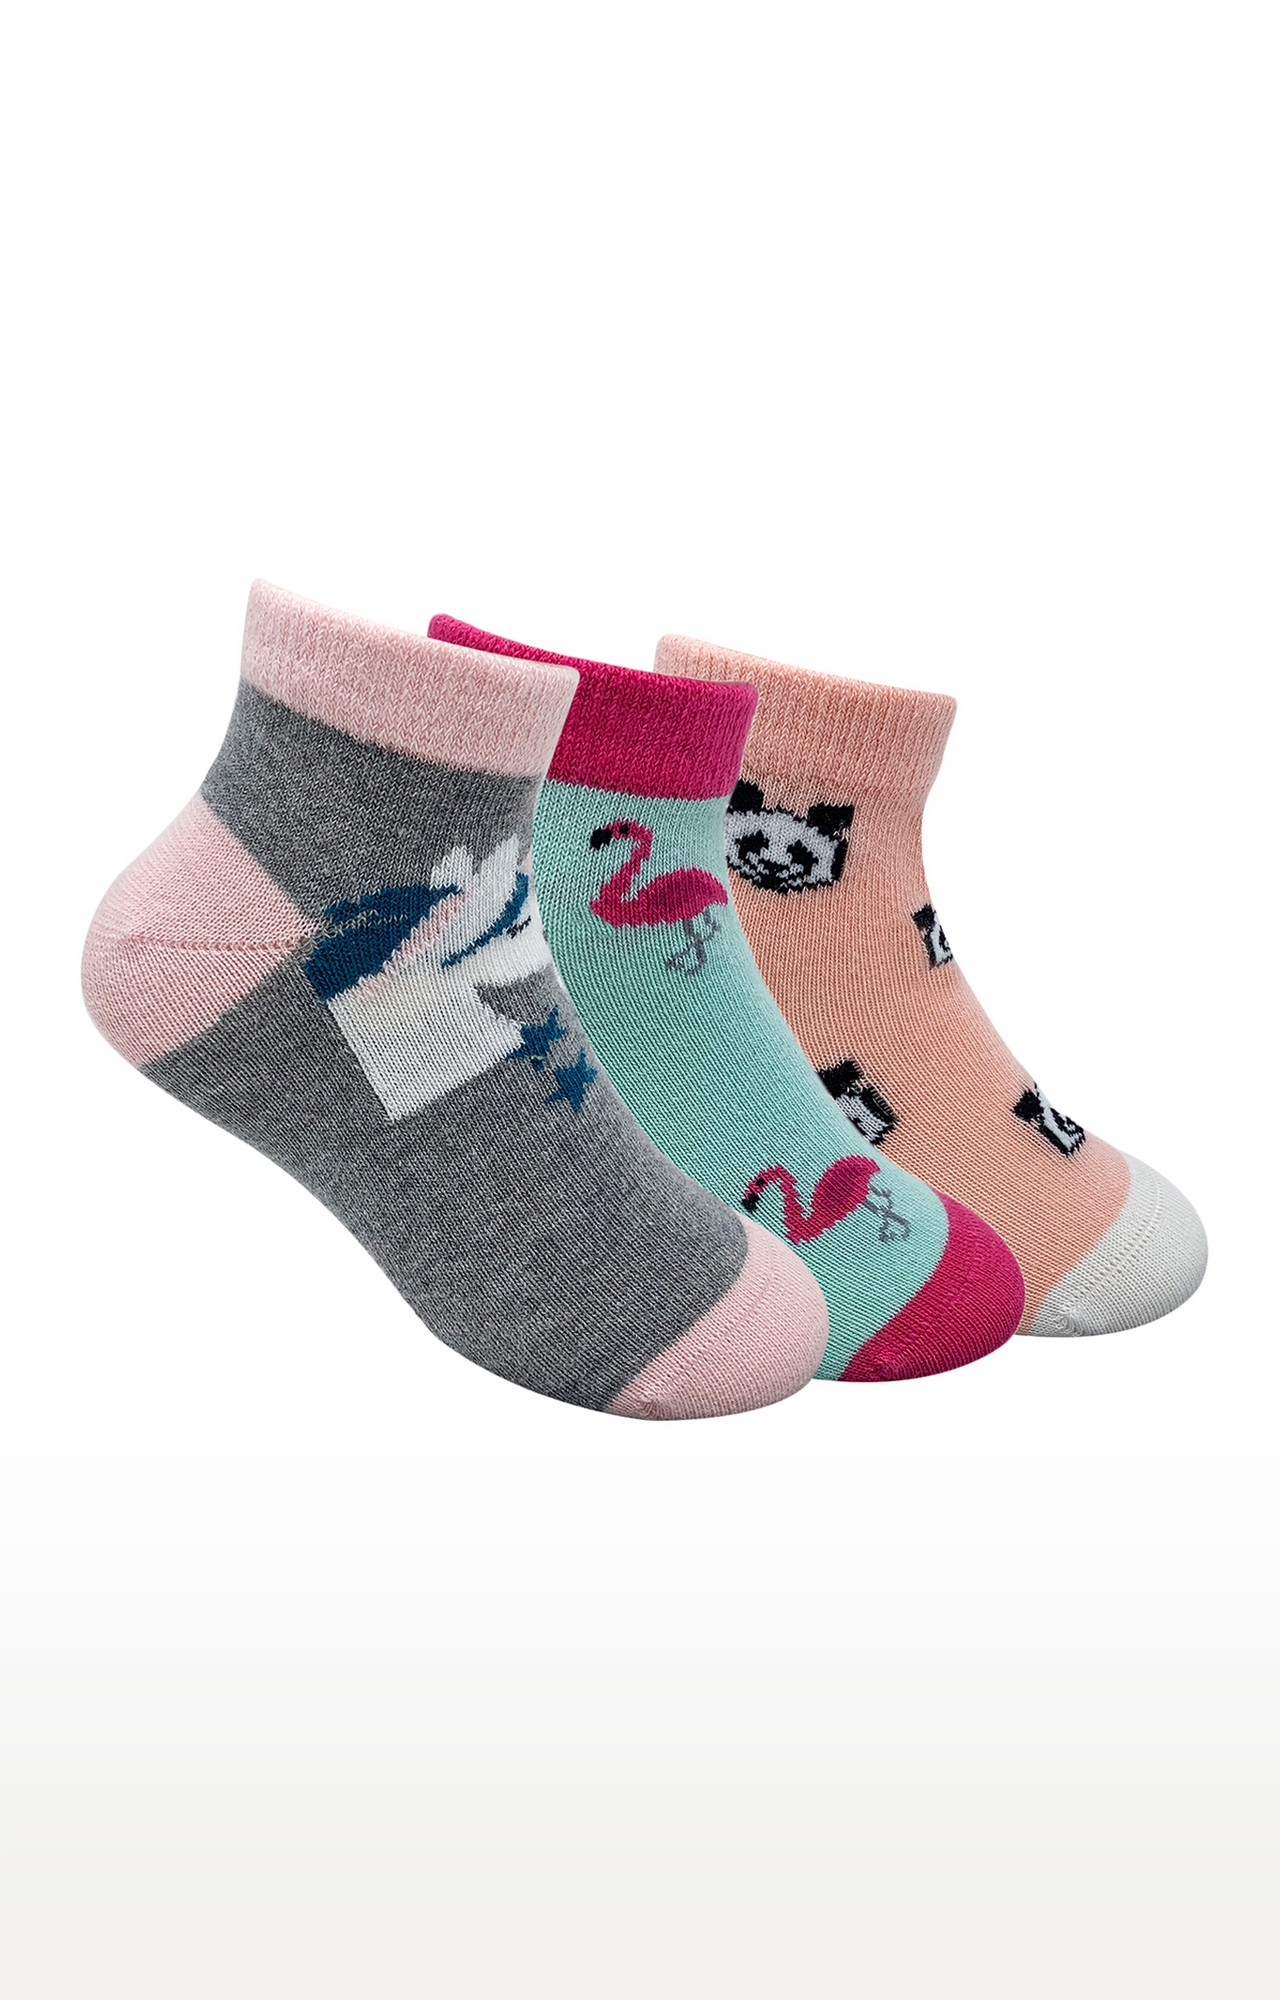 Mint & Oak | Mint & Oak Magical Feeling Cotton Multi Ankle Length Socks for Kids - Pack of 3